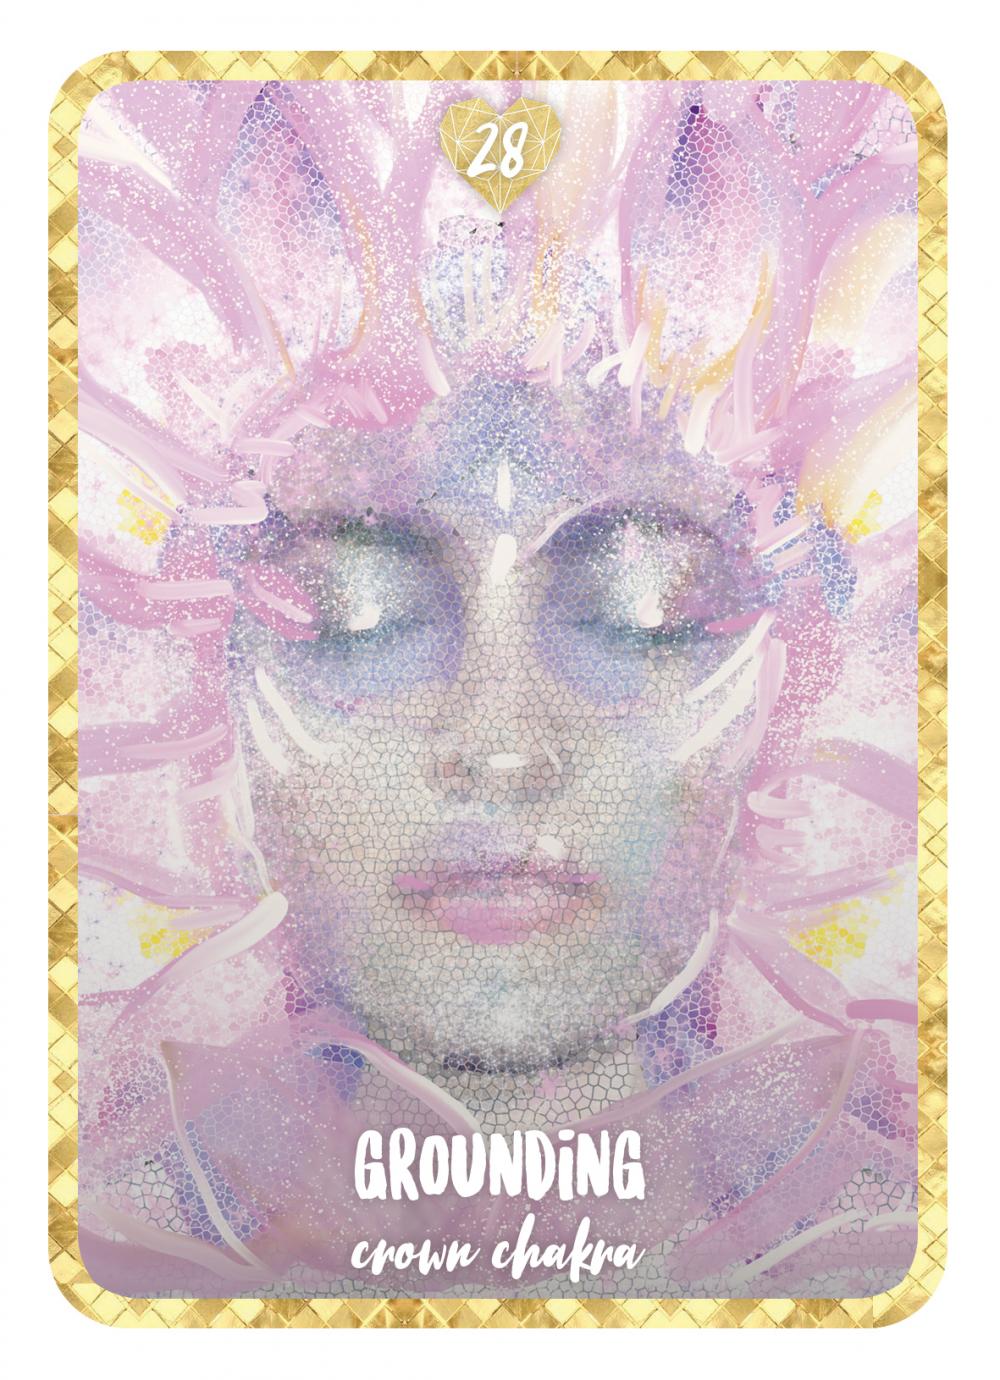 grounding card